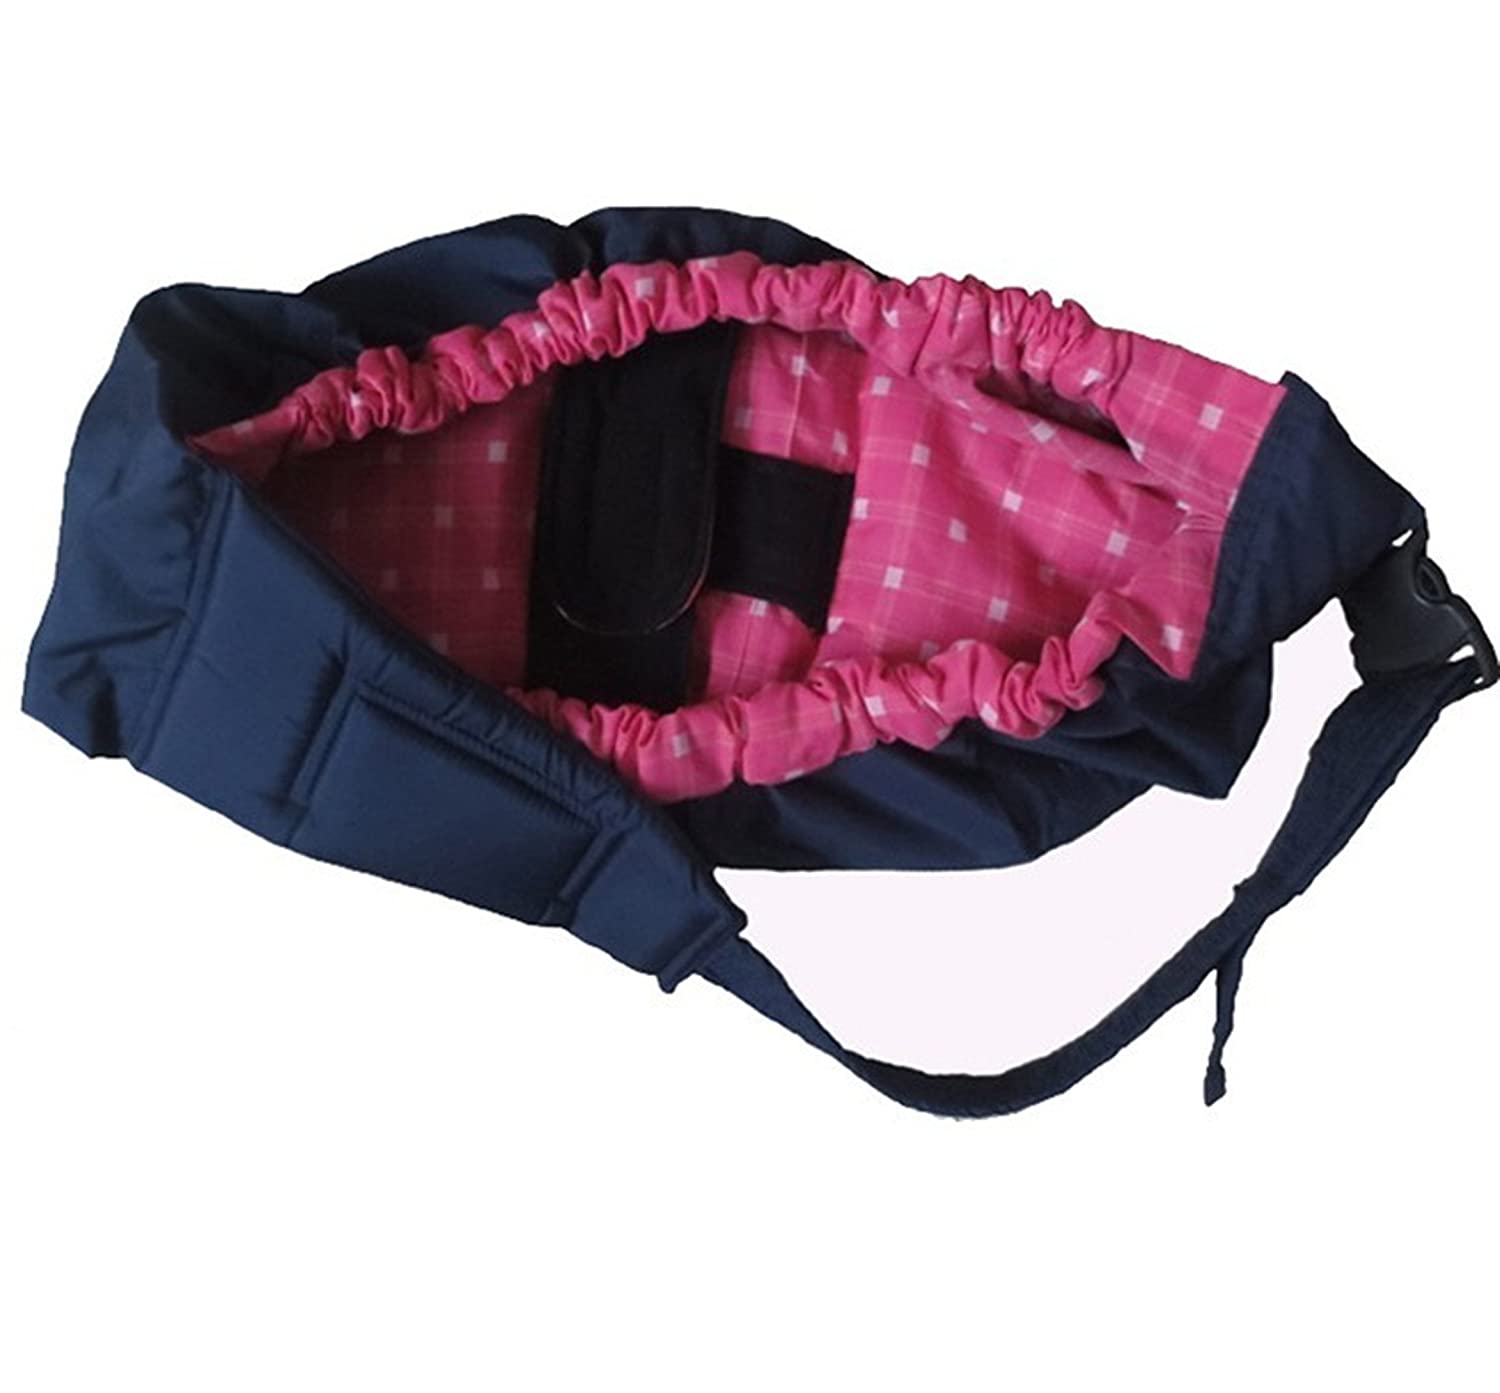 Meishine® Cotton Adjustable newborn baby carrier baby sling baby wrap carrier baby sling baby carrier front Carrier rose